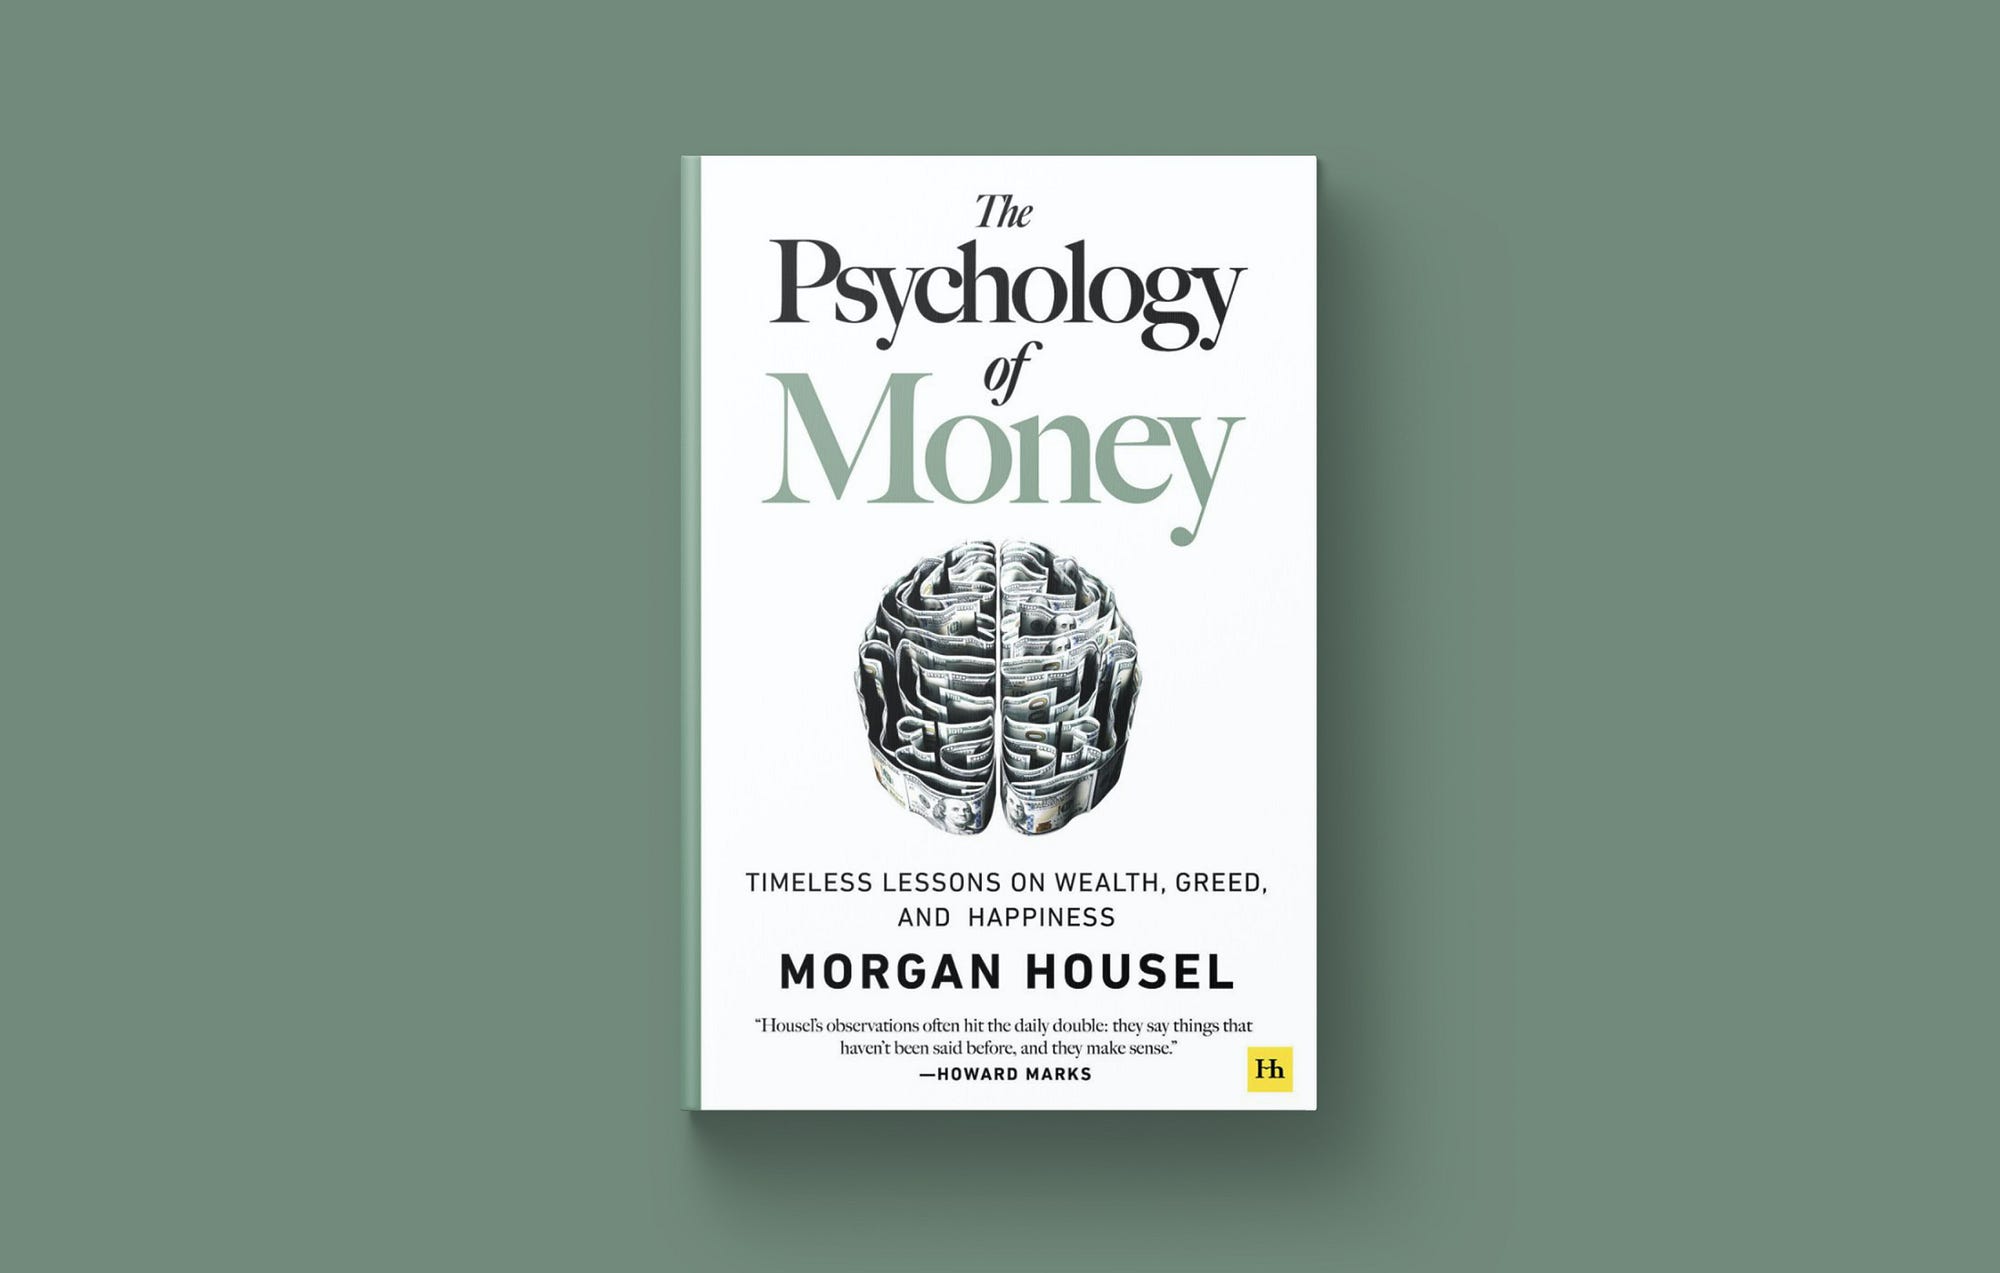 The Psychology of Money by Morgan Housel - My Key Takeaways - Siddharth  Chatterjee